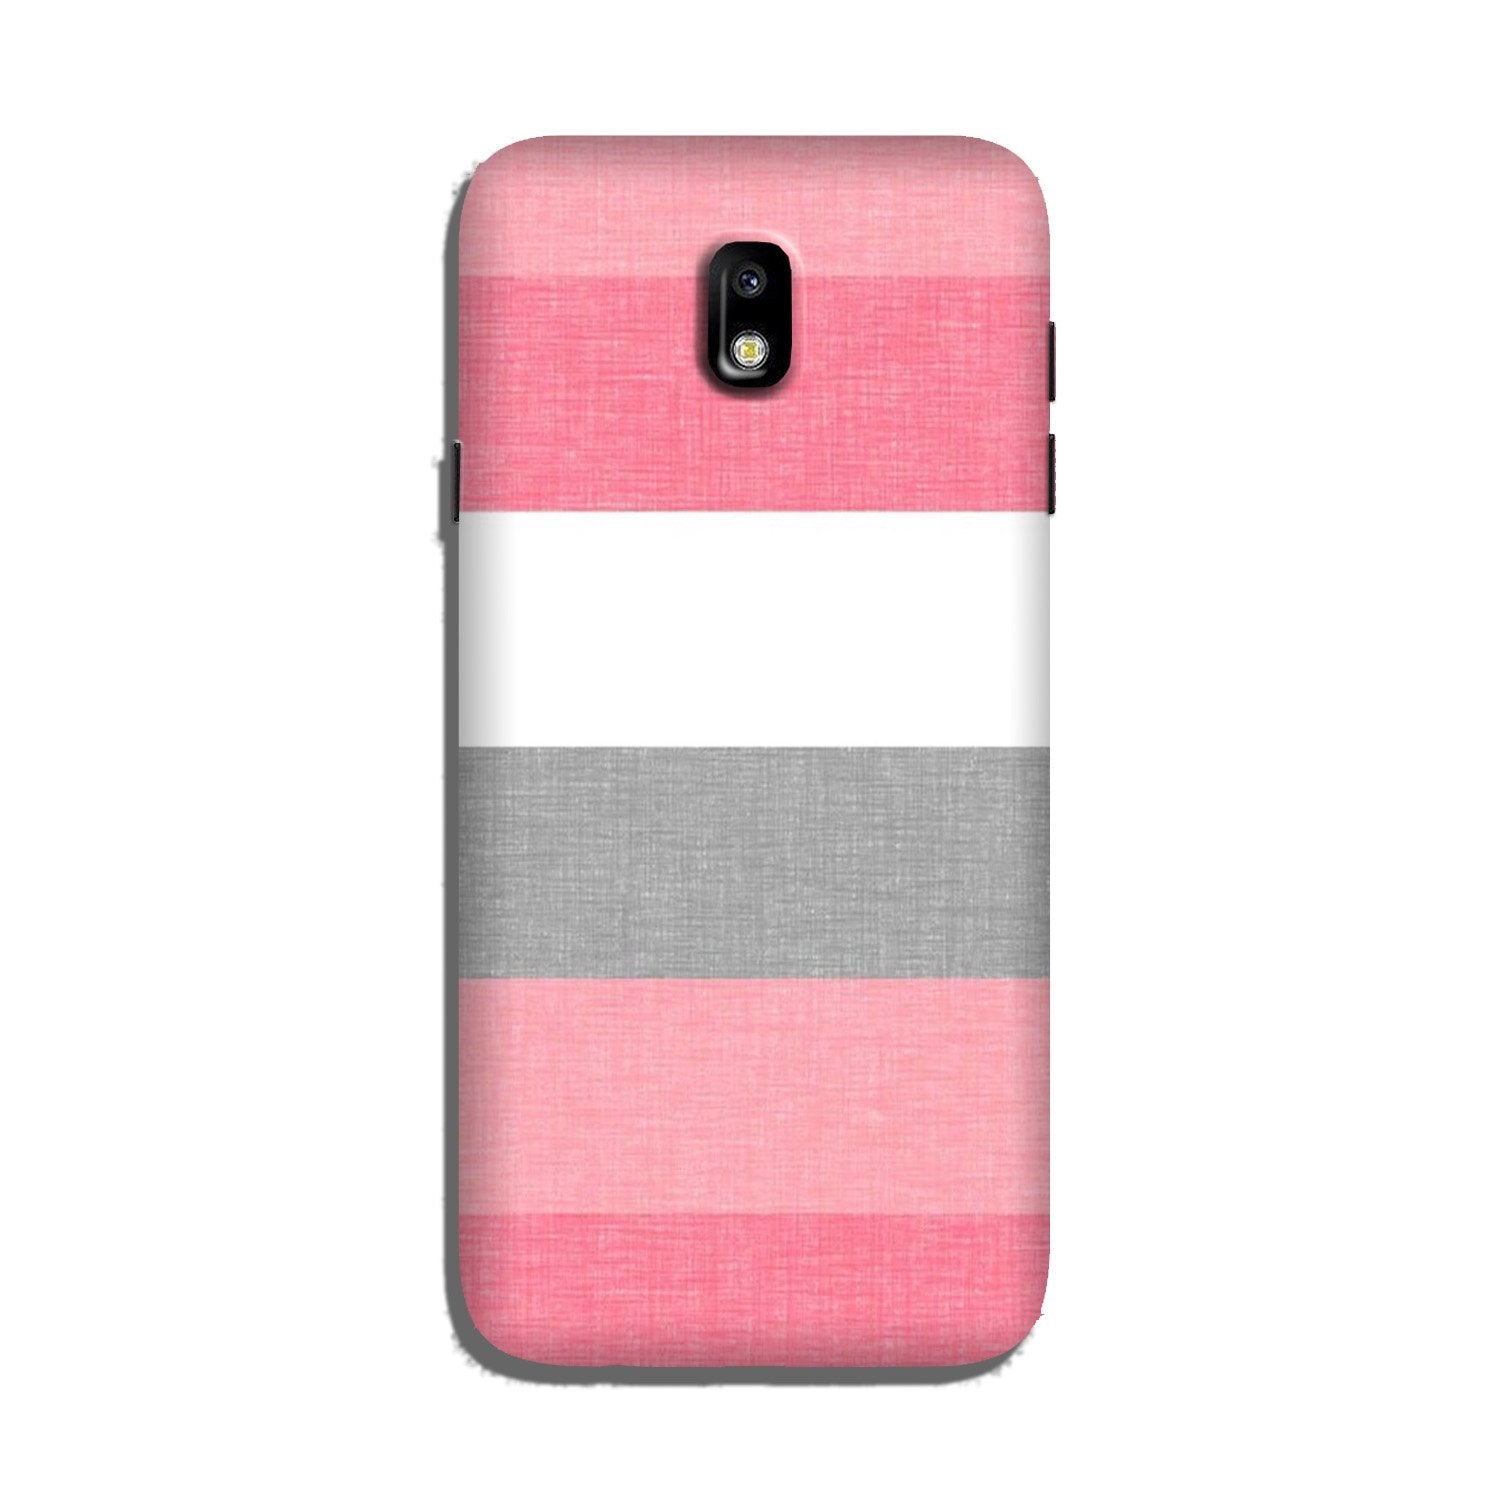 Pink white pattern Case for Galaxy J5 Pro